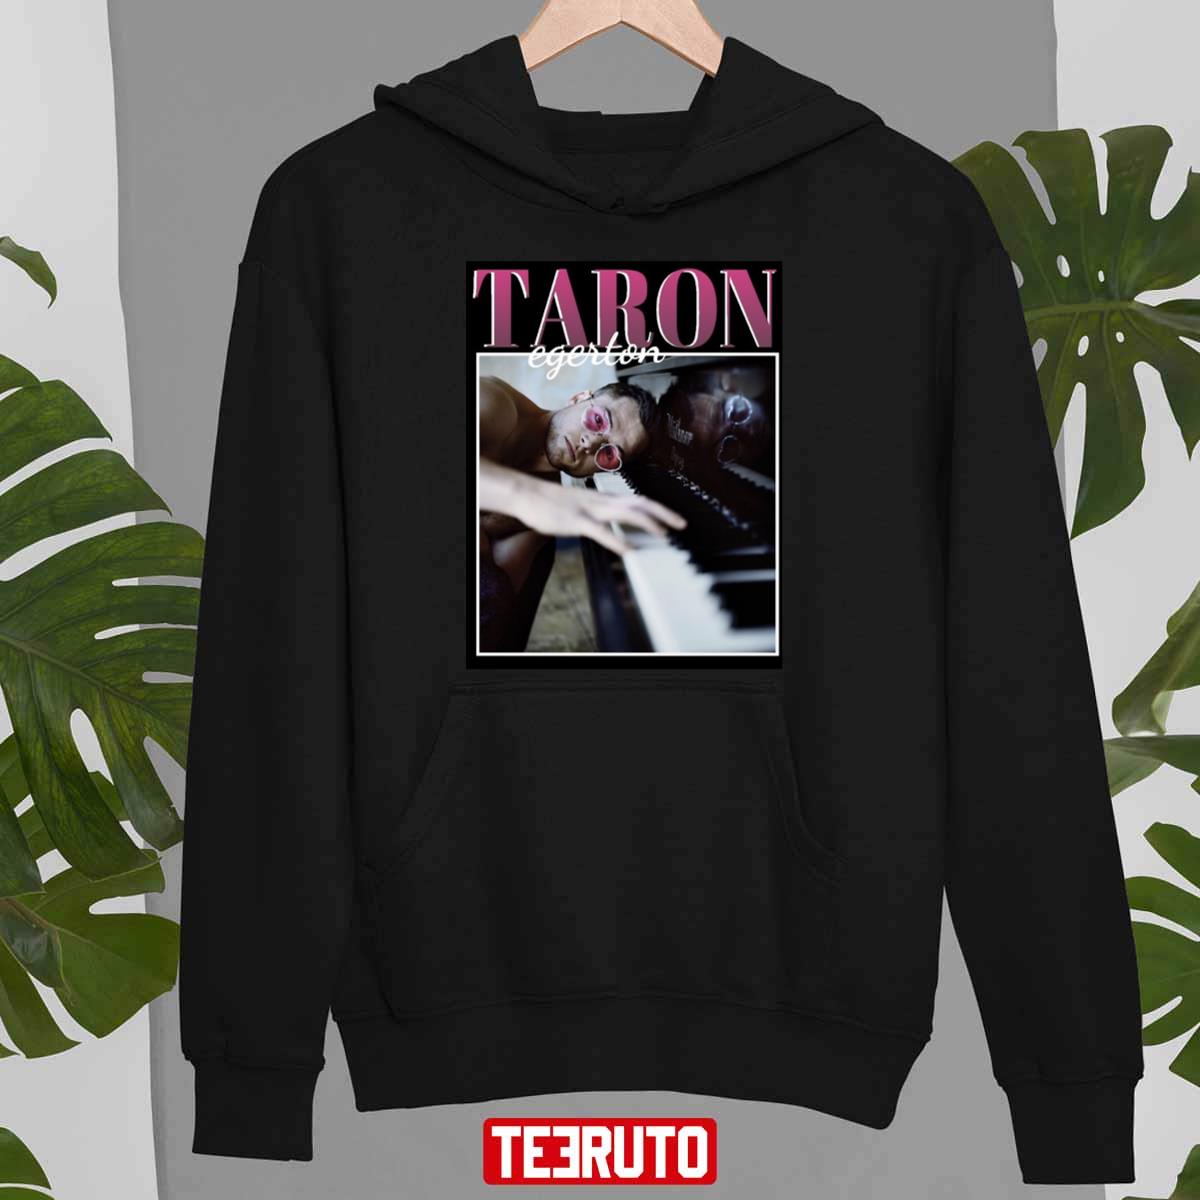 Taron Egerton 90s Vintage Unisex T-Shirt